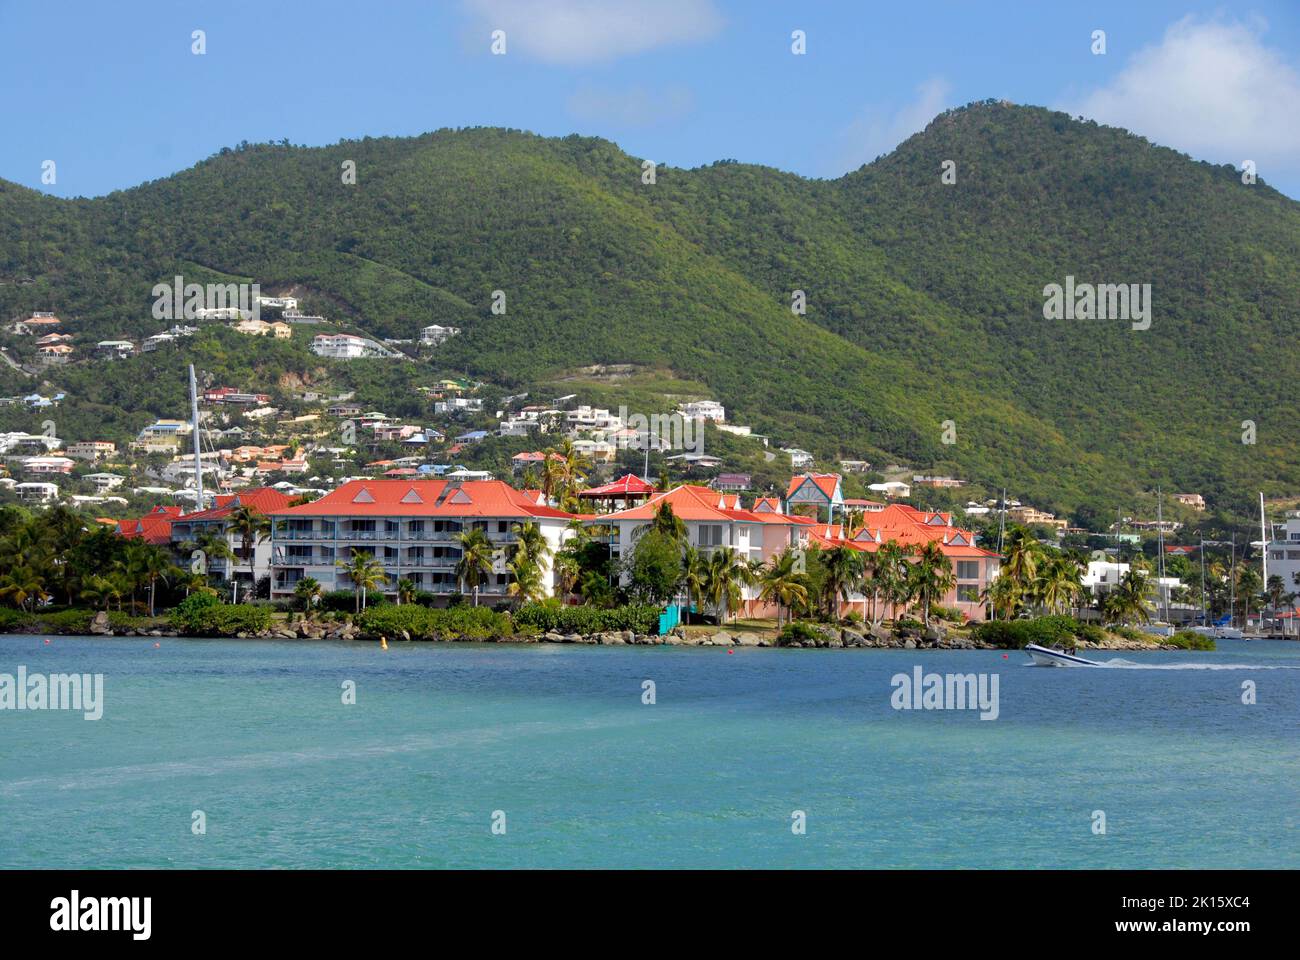 Am Wasser gelegene Gebäude an der Simpson Bay Lagoon, Sint Maarten, Karibik Stockfoto